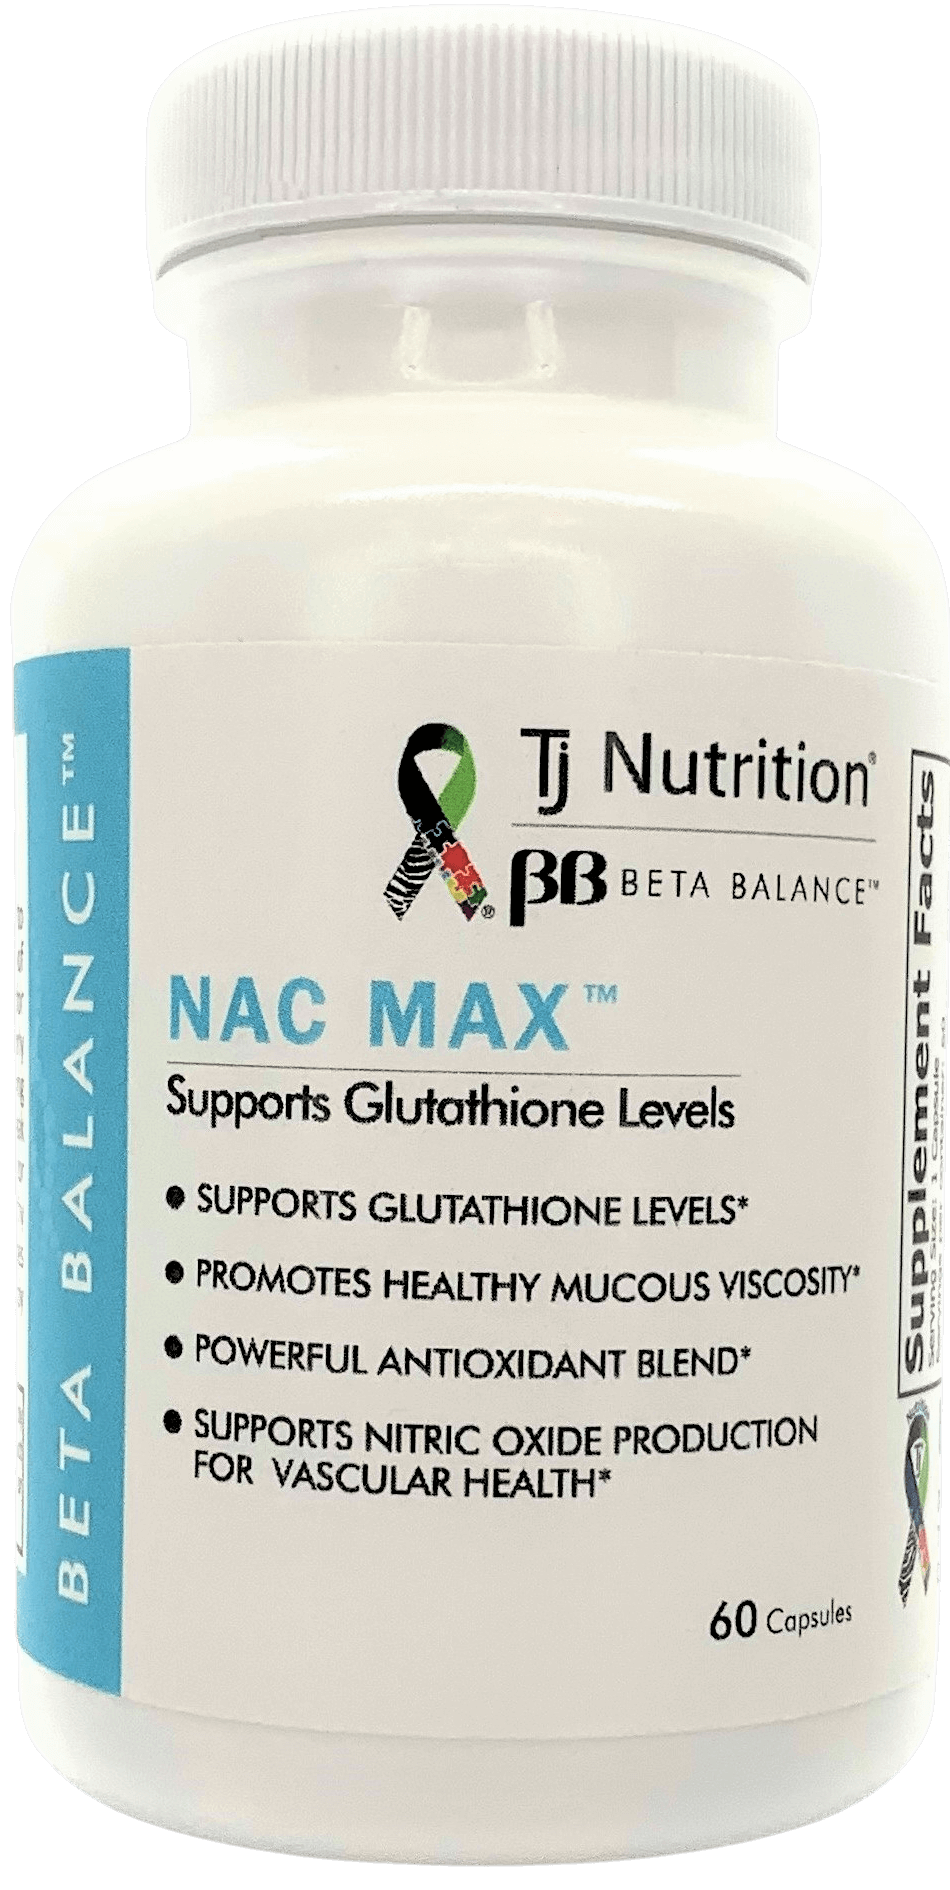 NAC MAX Bottle